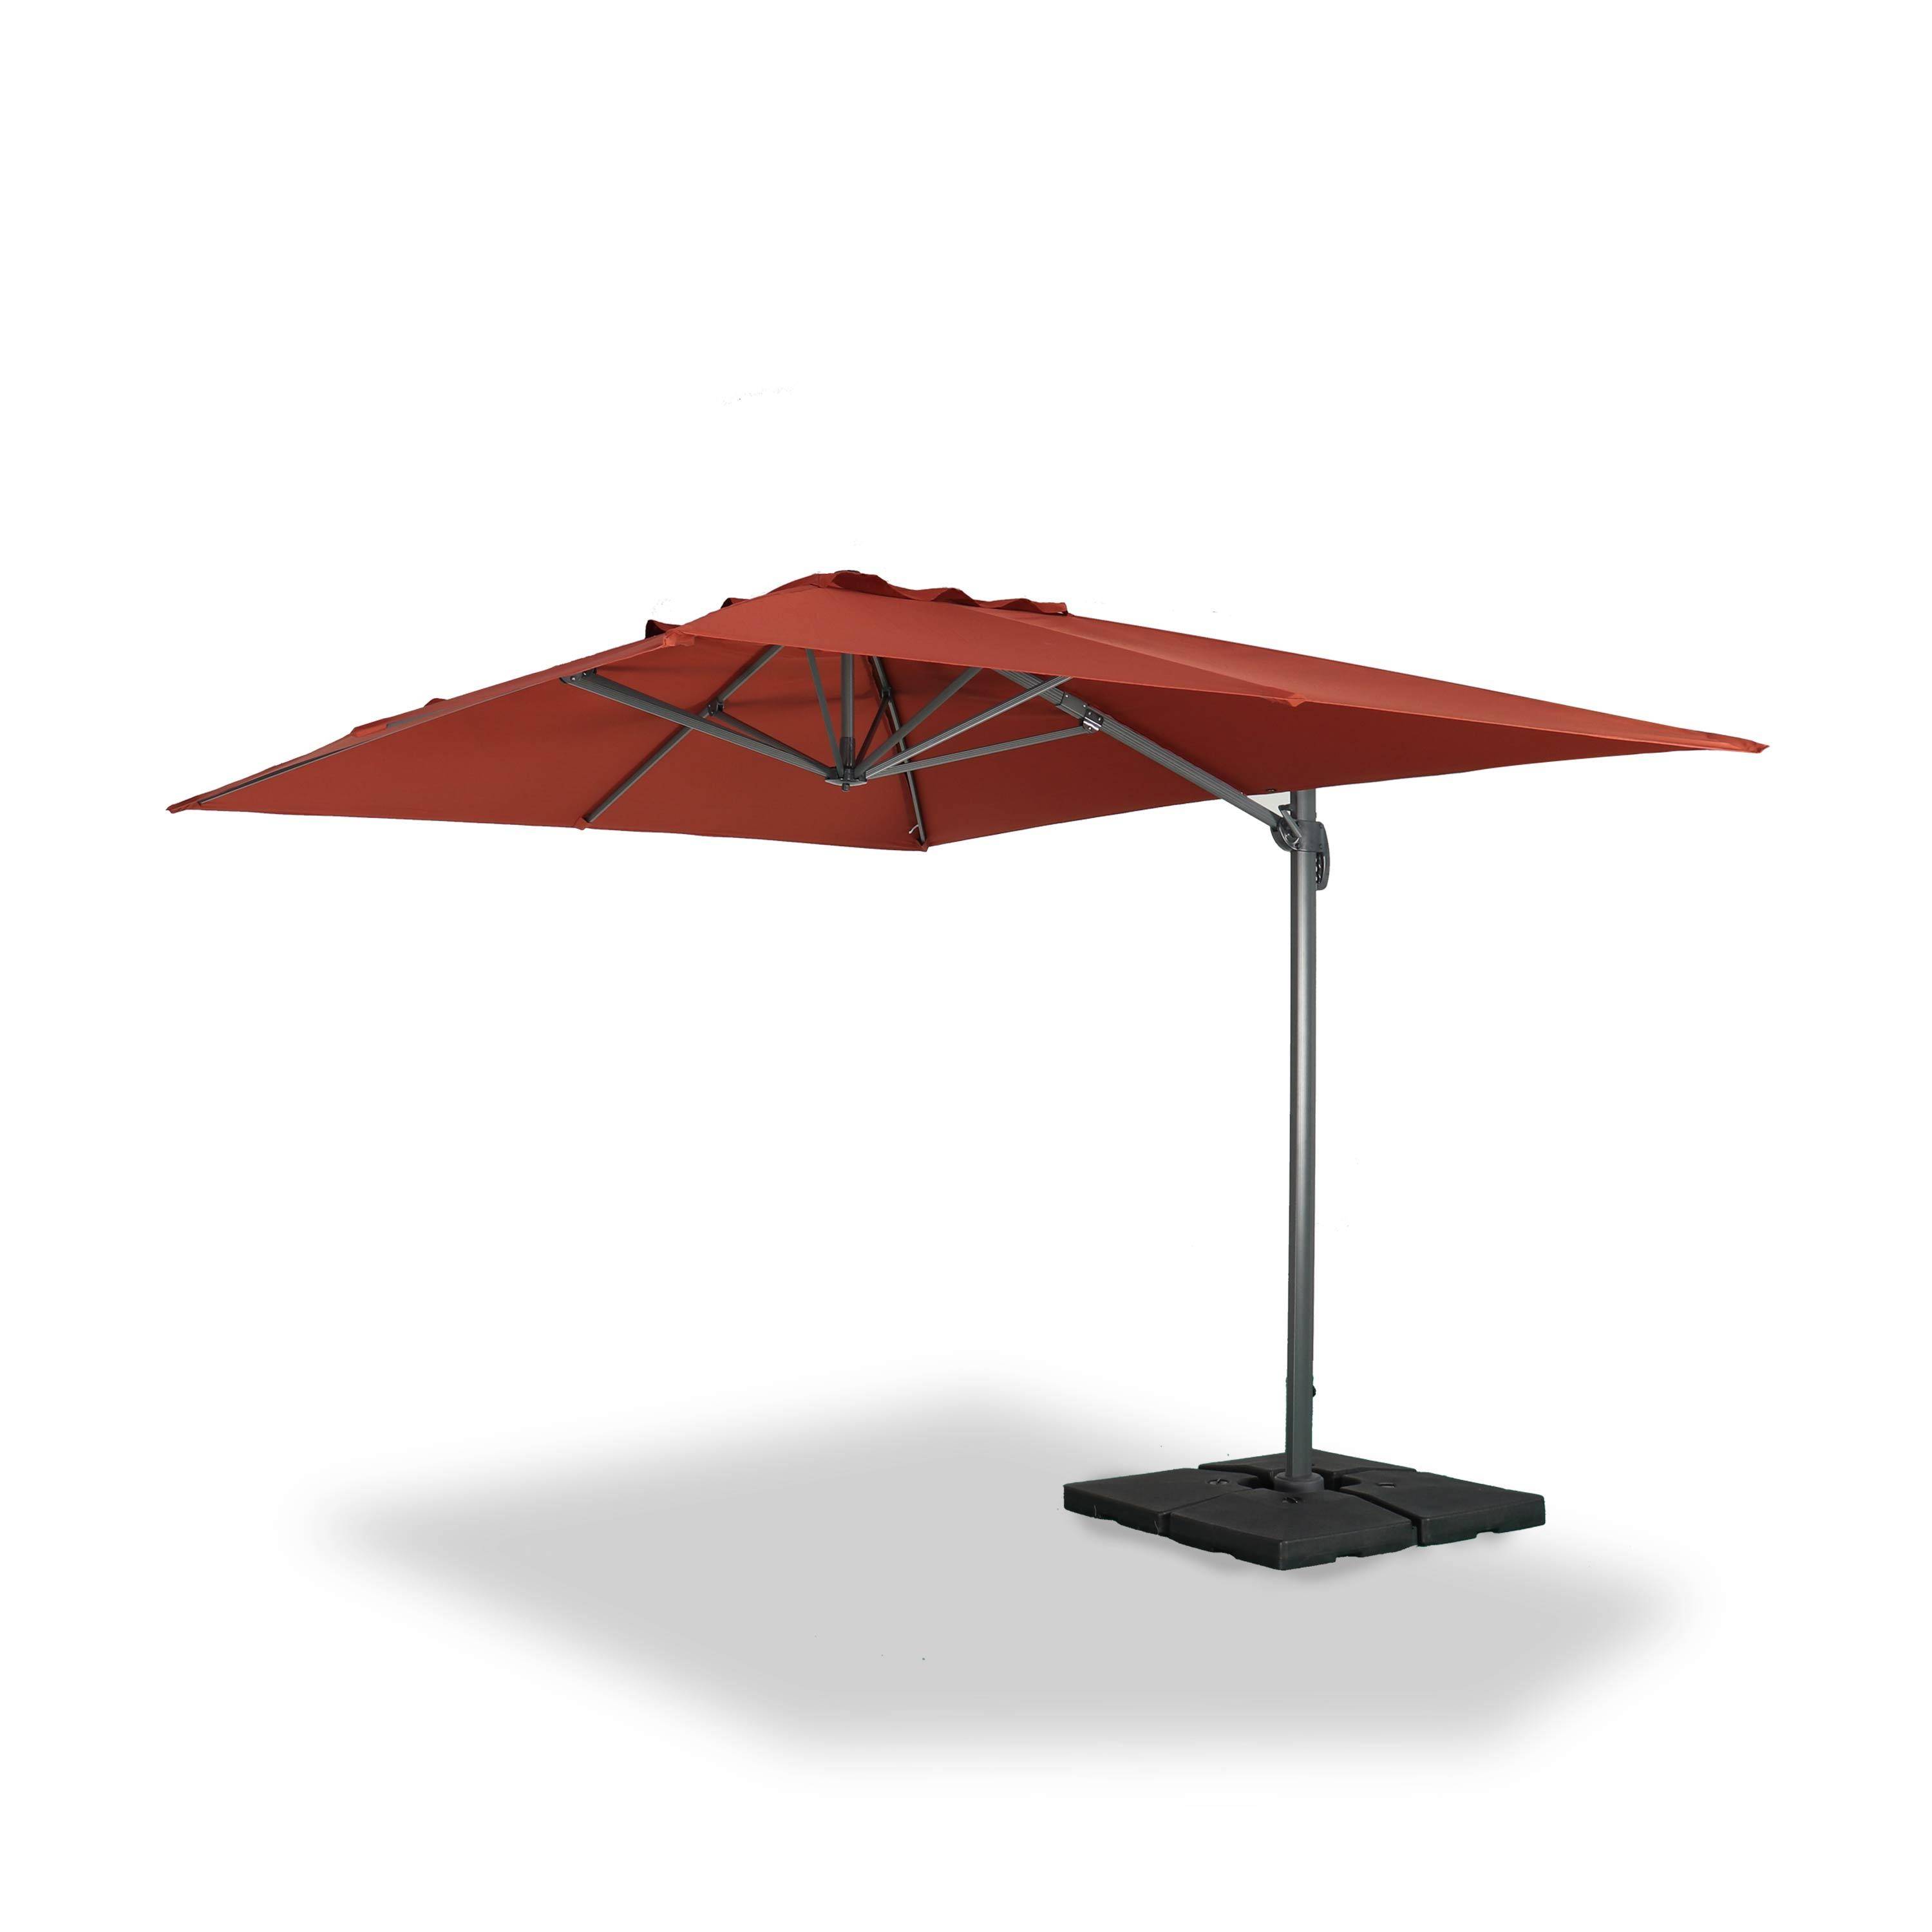 Rectangular cantilever parasol, 3x4m - Saint Jean de Luz - Terracotta,sweeek,Photo1